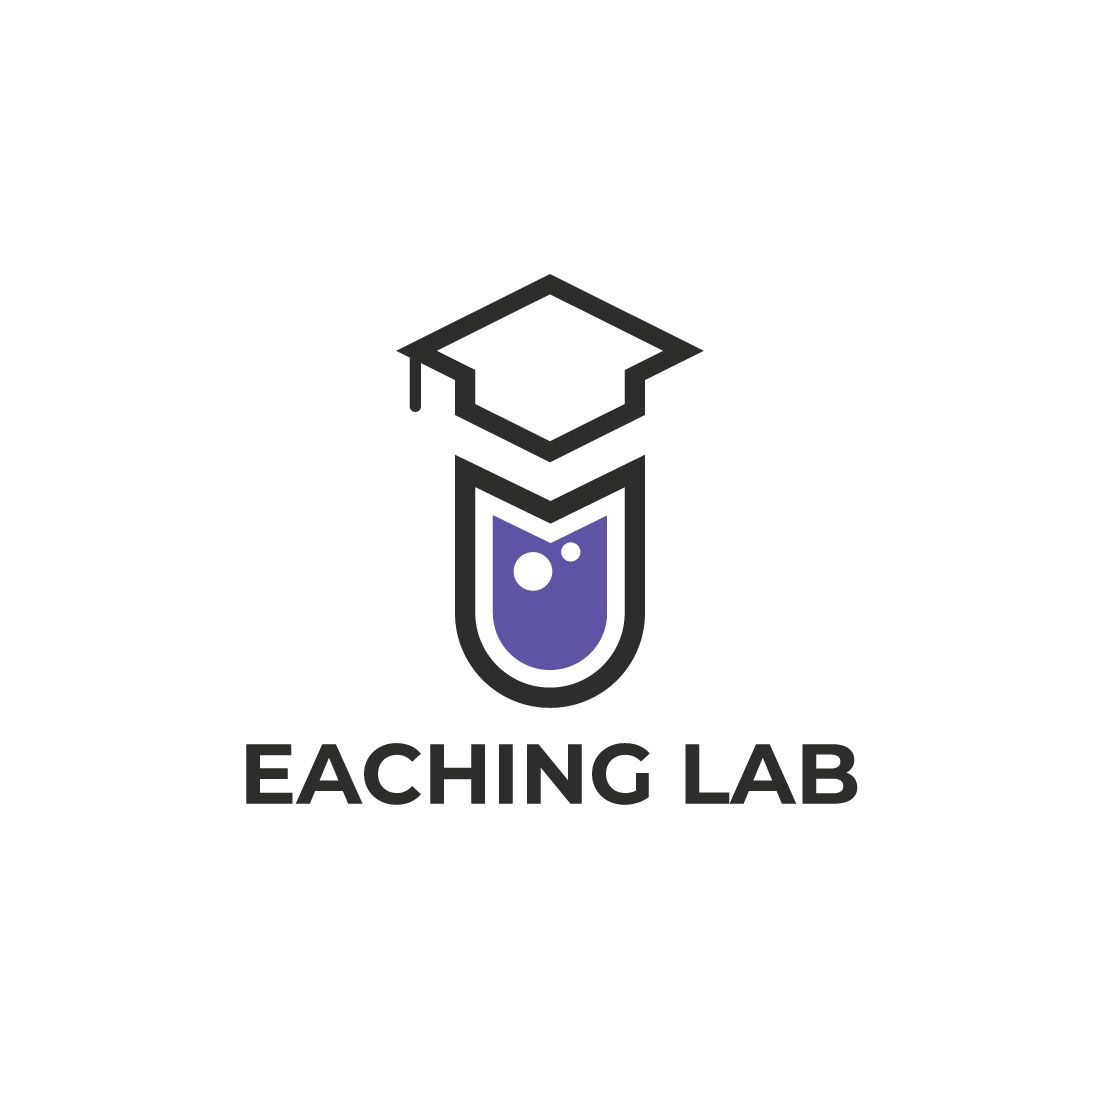 Teaching lab logo design preview image.